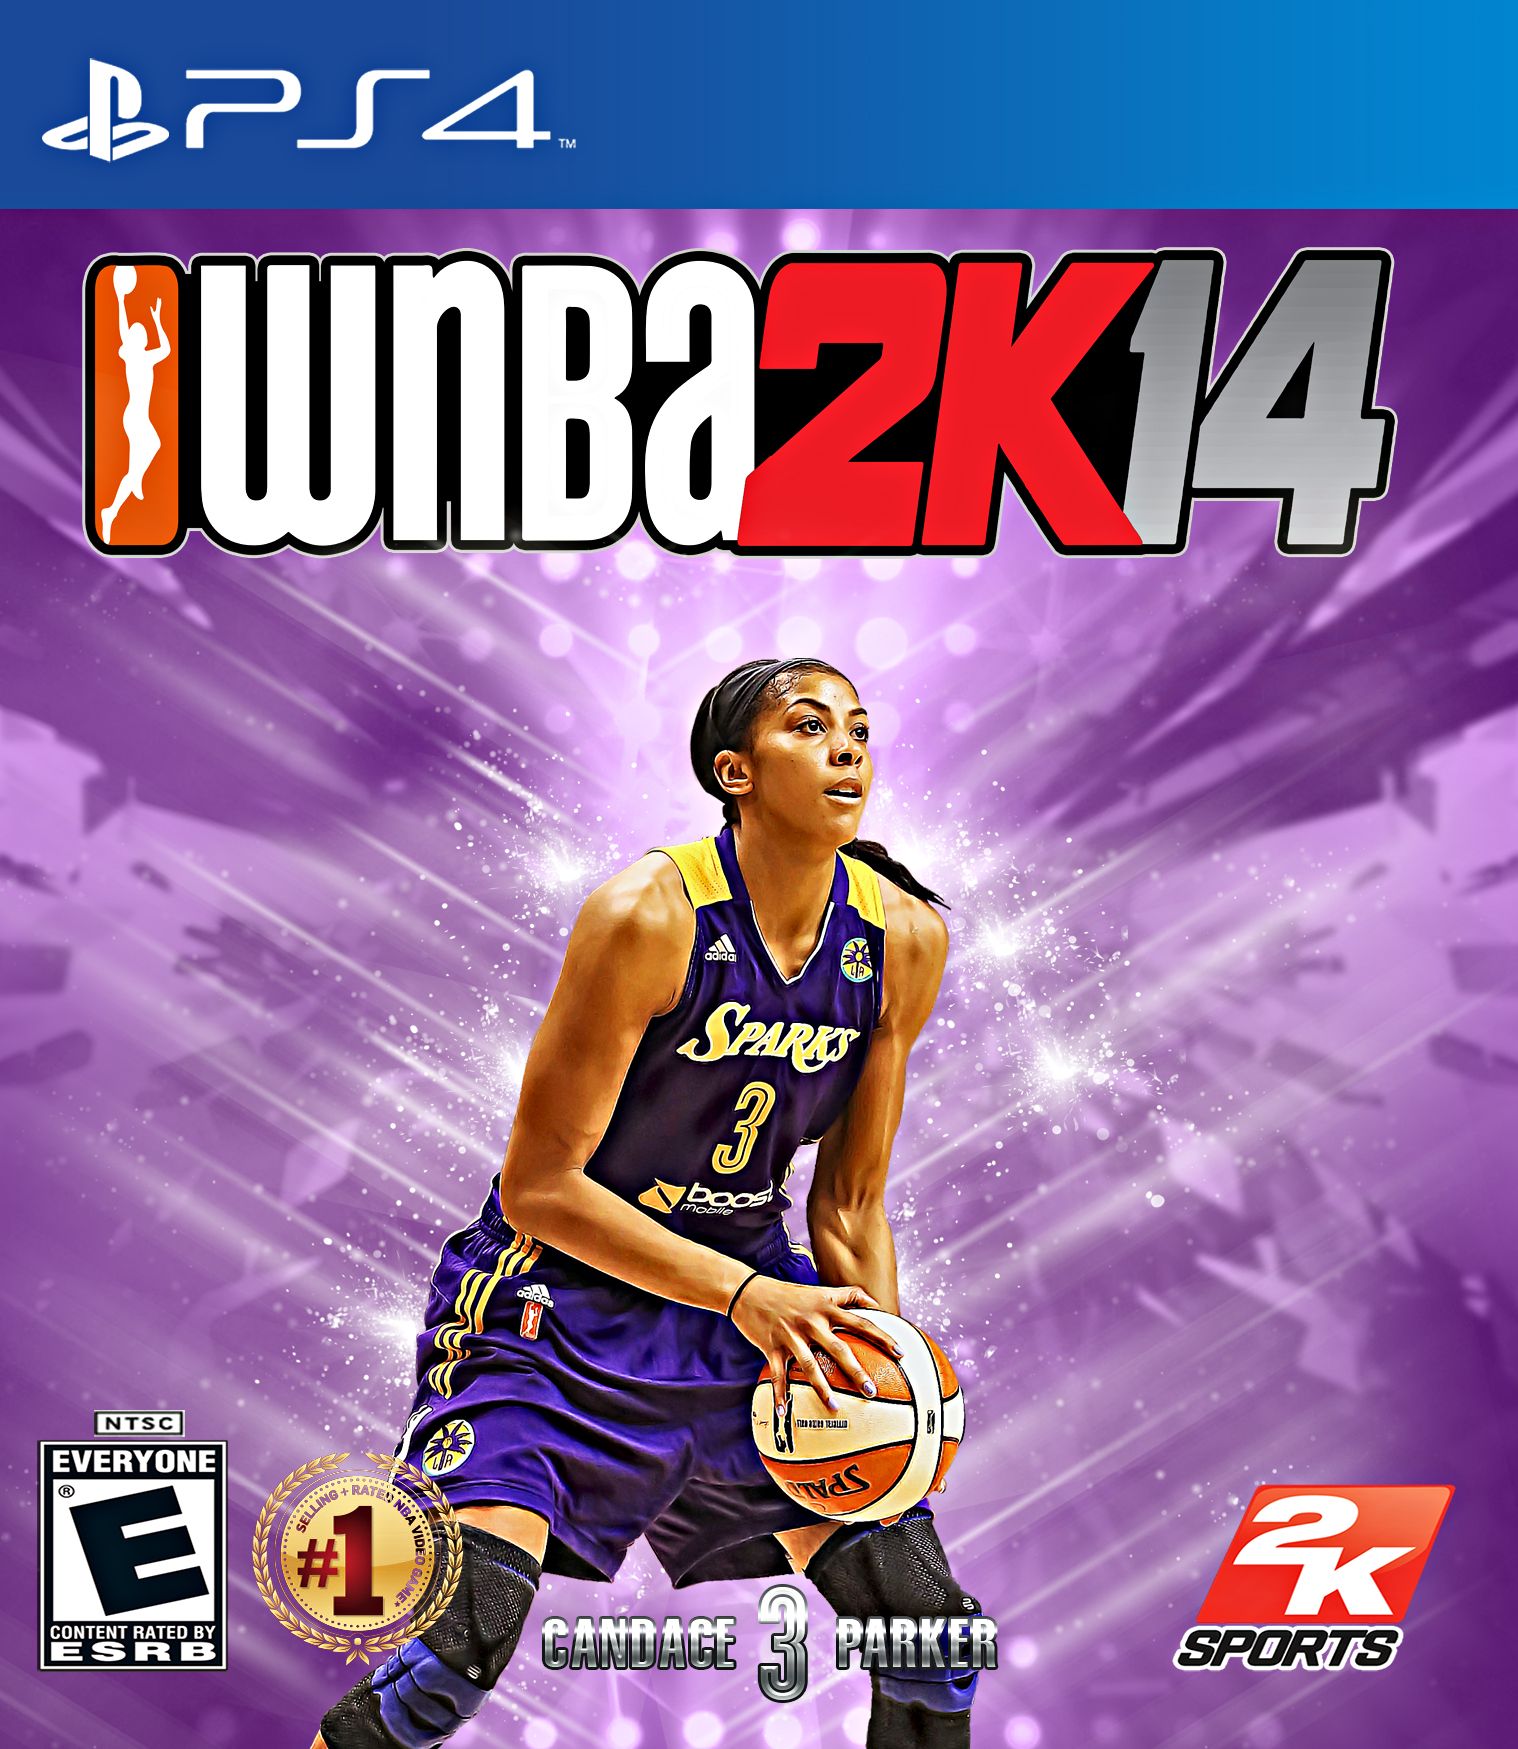 WNBA 2K14 Candace Parker by NO LooK PaSS on DeviantArt